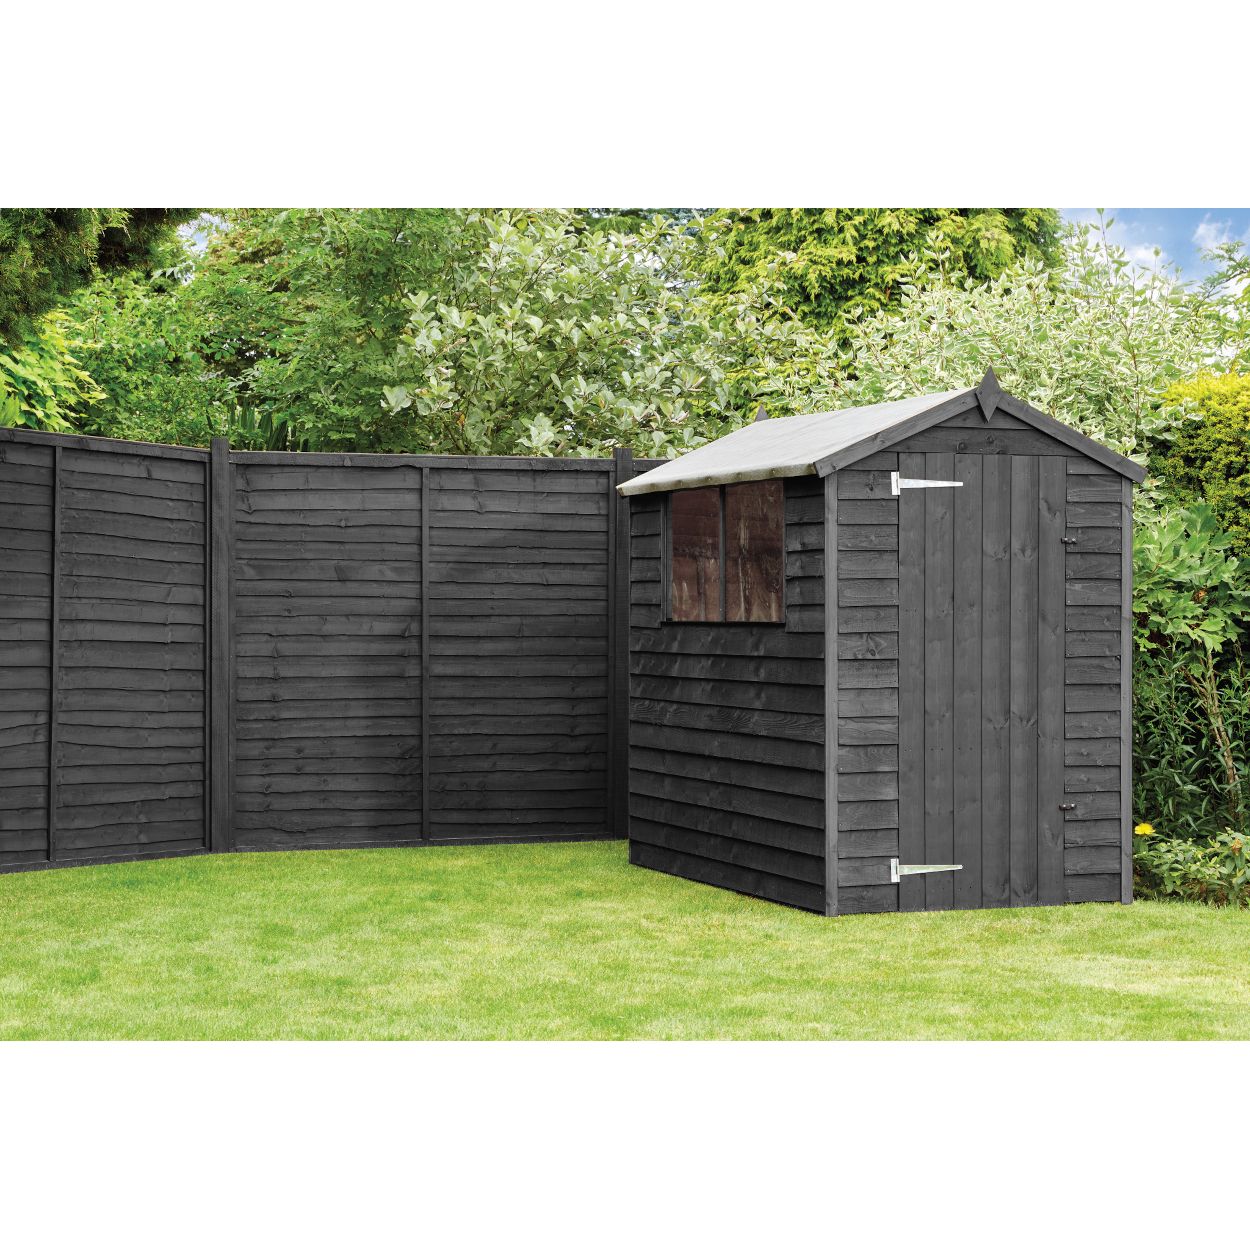 Ronseal One Coat Fence Life 5L - Tudor Black